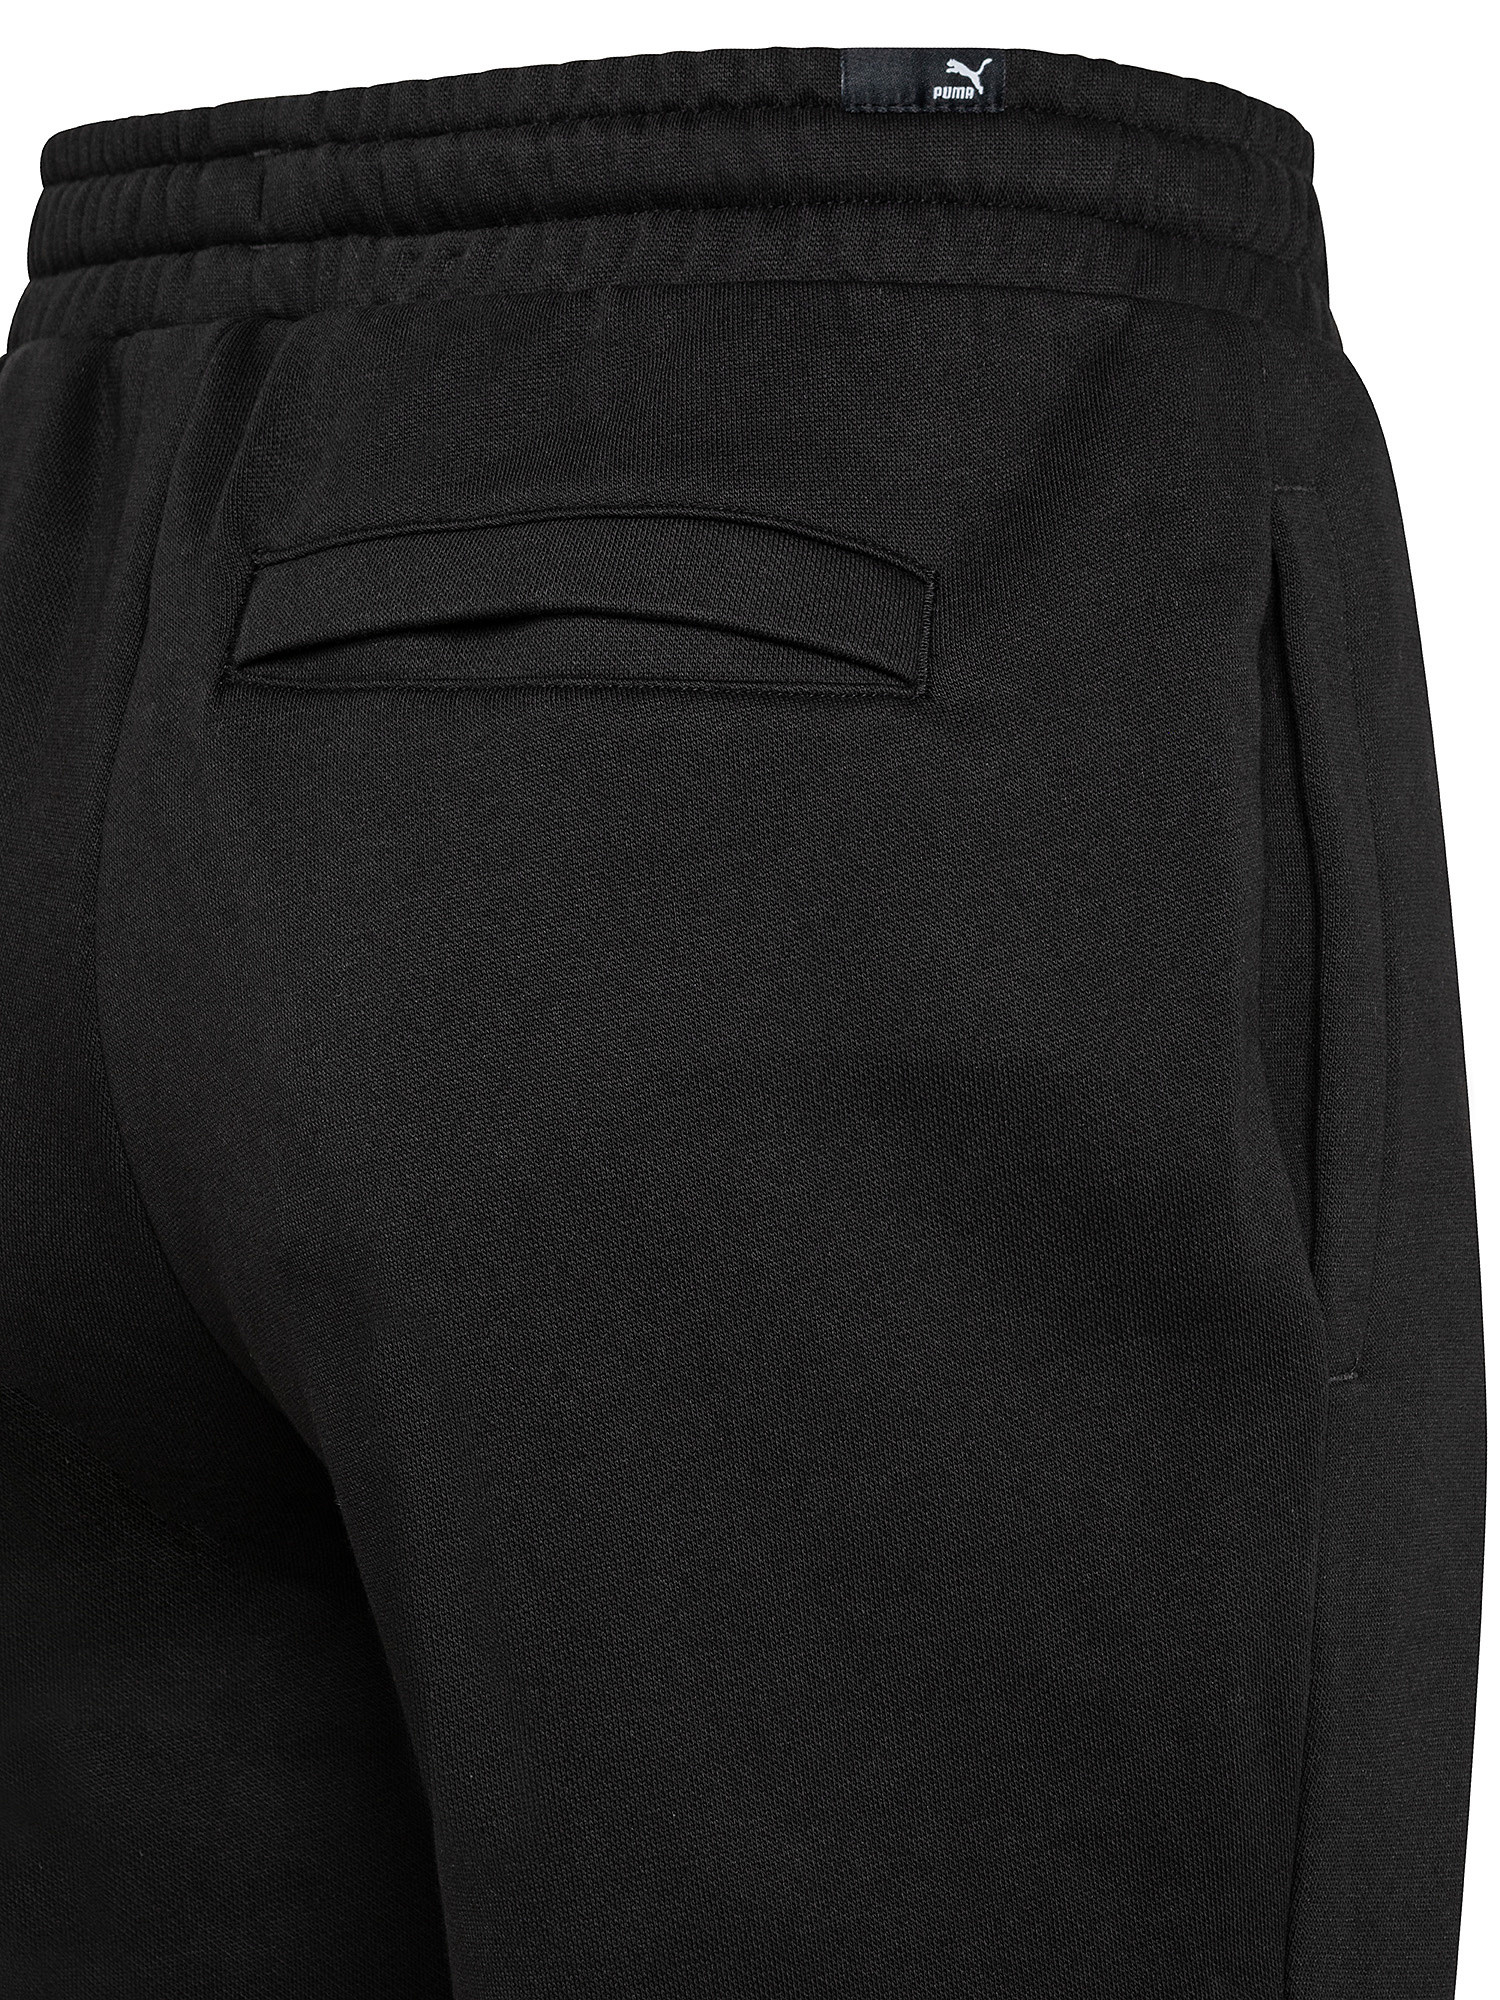 Sweatpants with logo, Black, large image number 2